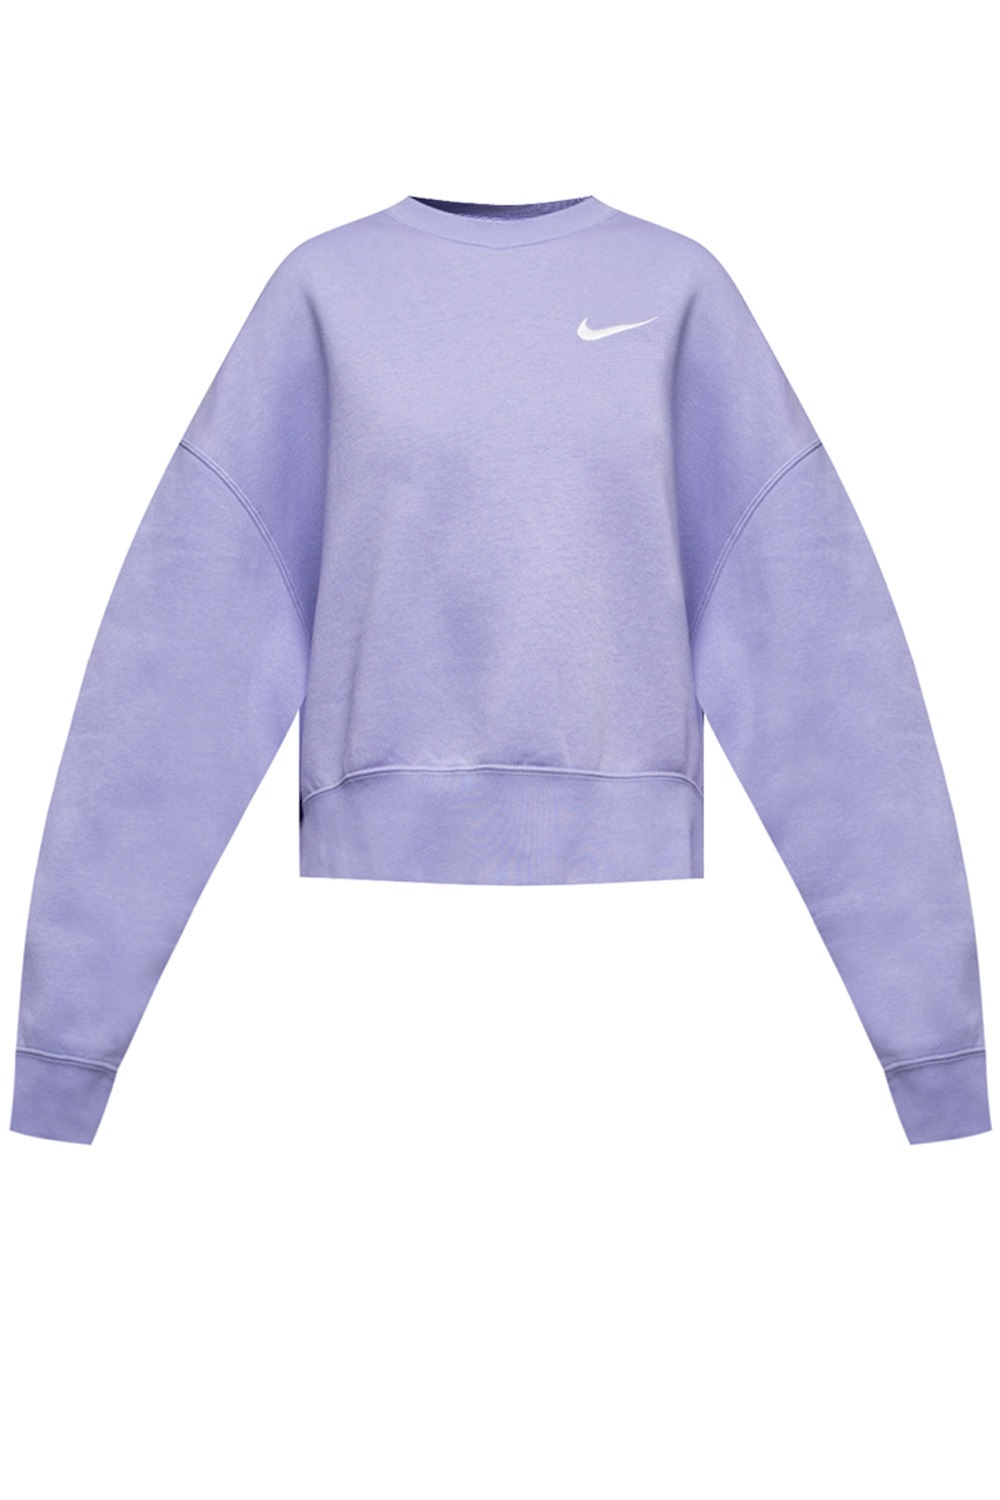 nike sweatshirt light purple